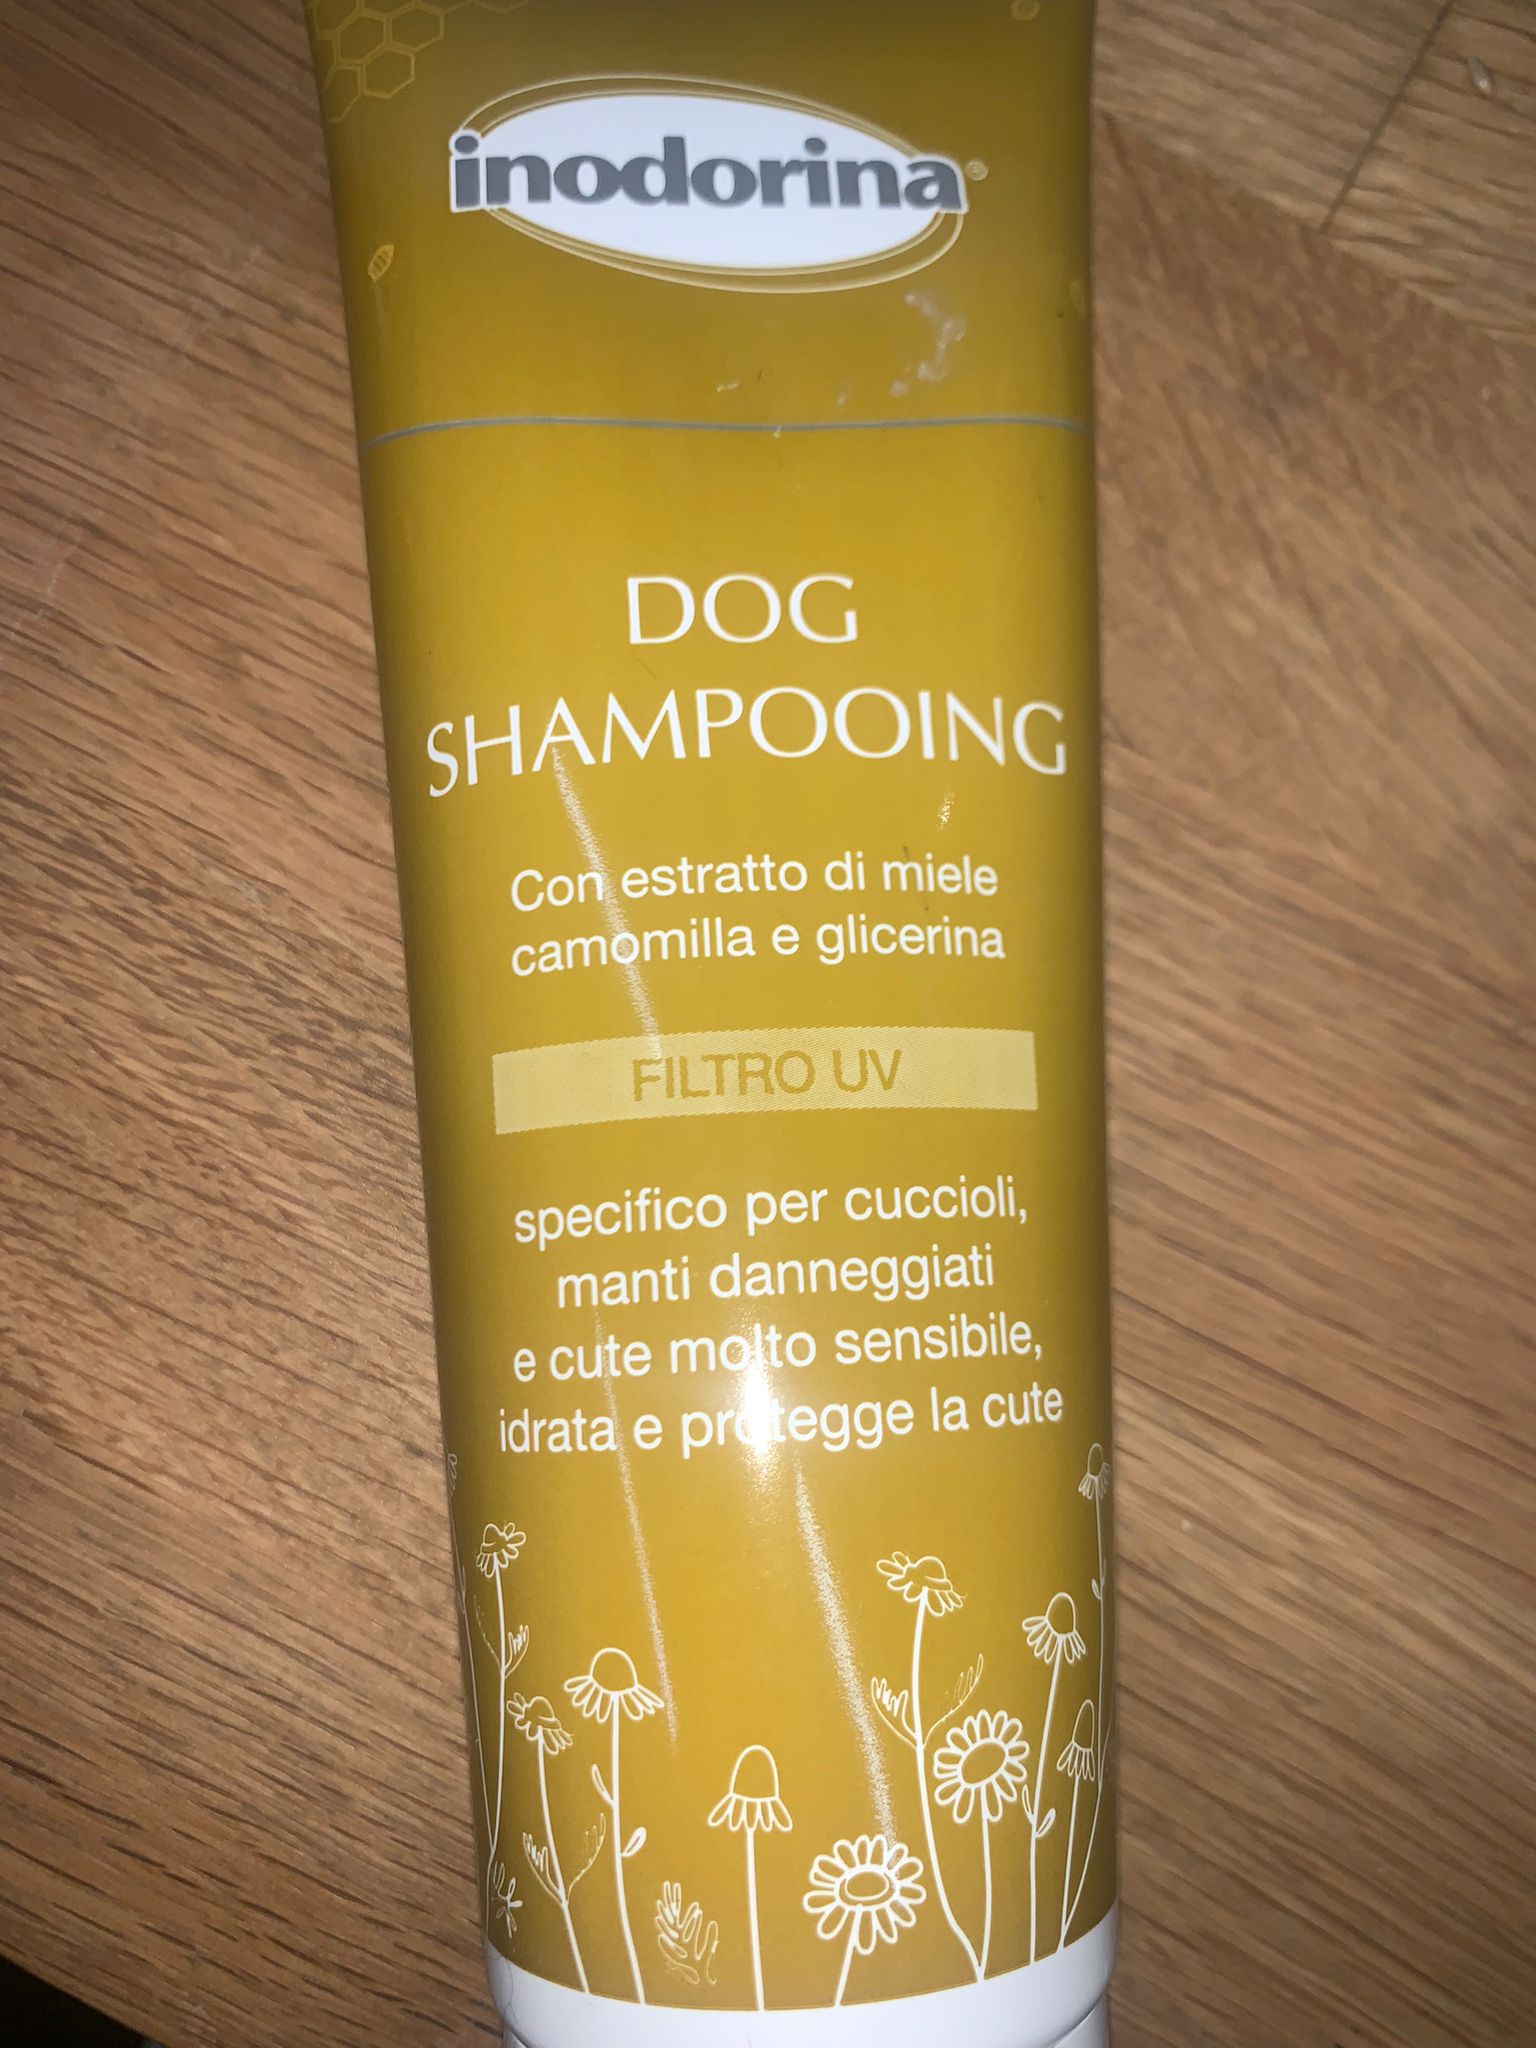 Shampoo INODORINA Miele camomille e glicerina